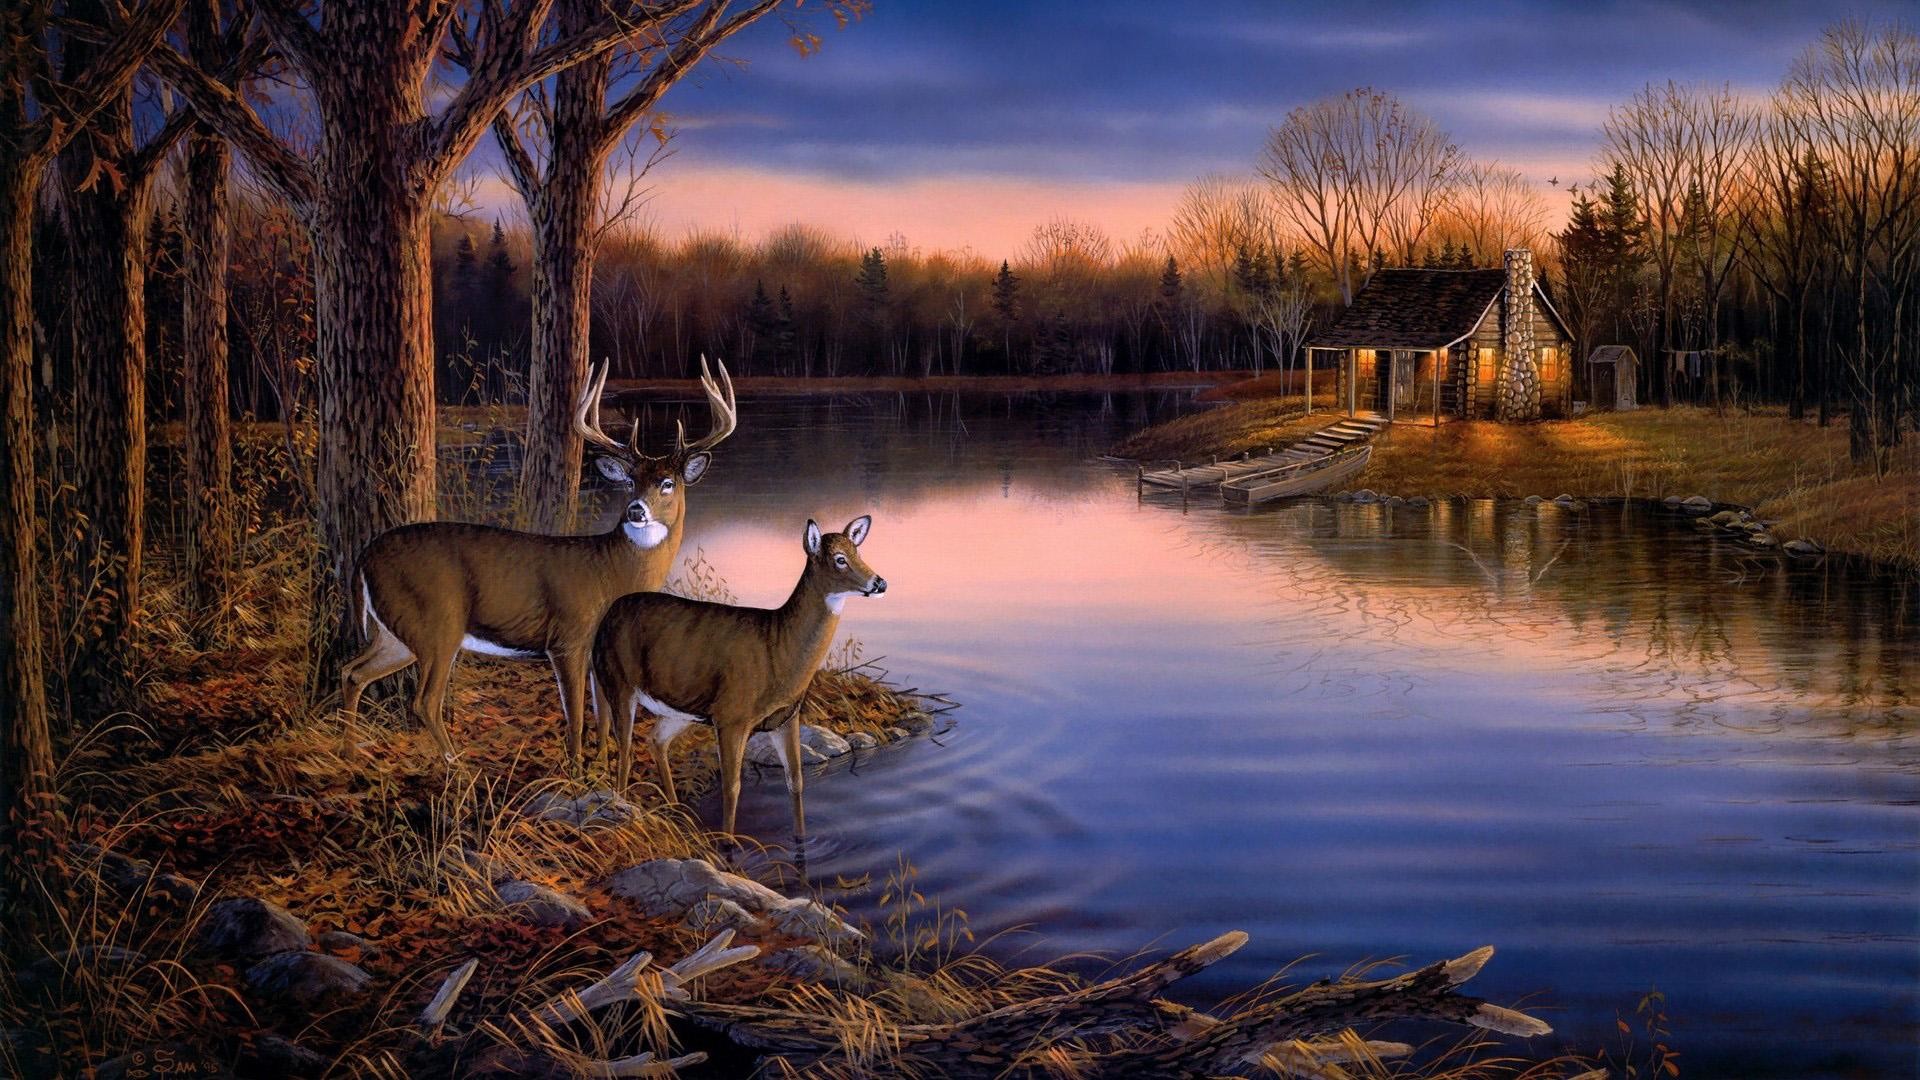 Deer Hunting Wallpaper Border ,landscape wallpaper Picture 1080p hd wallpaper